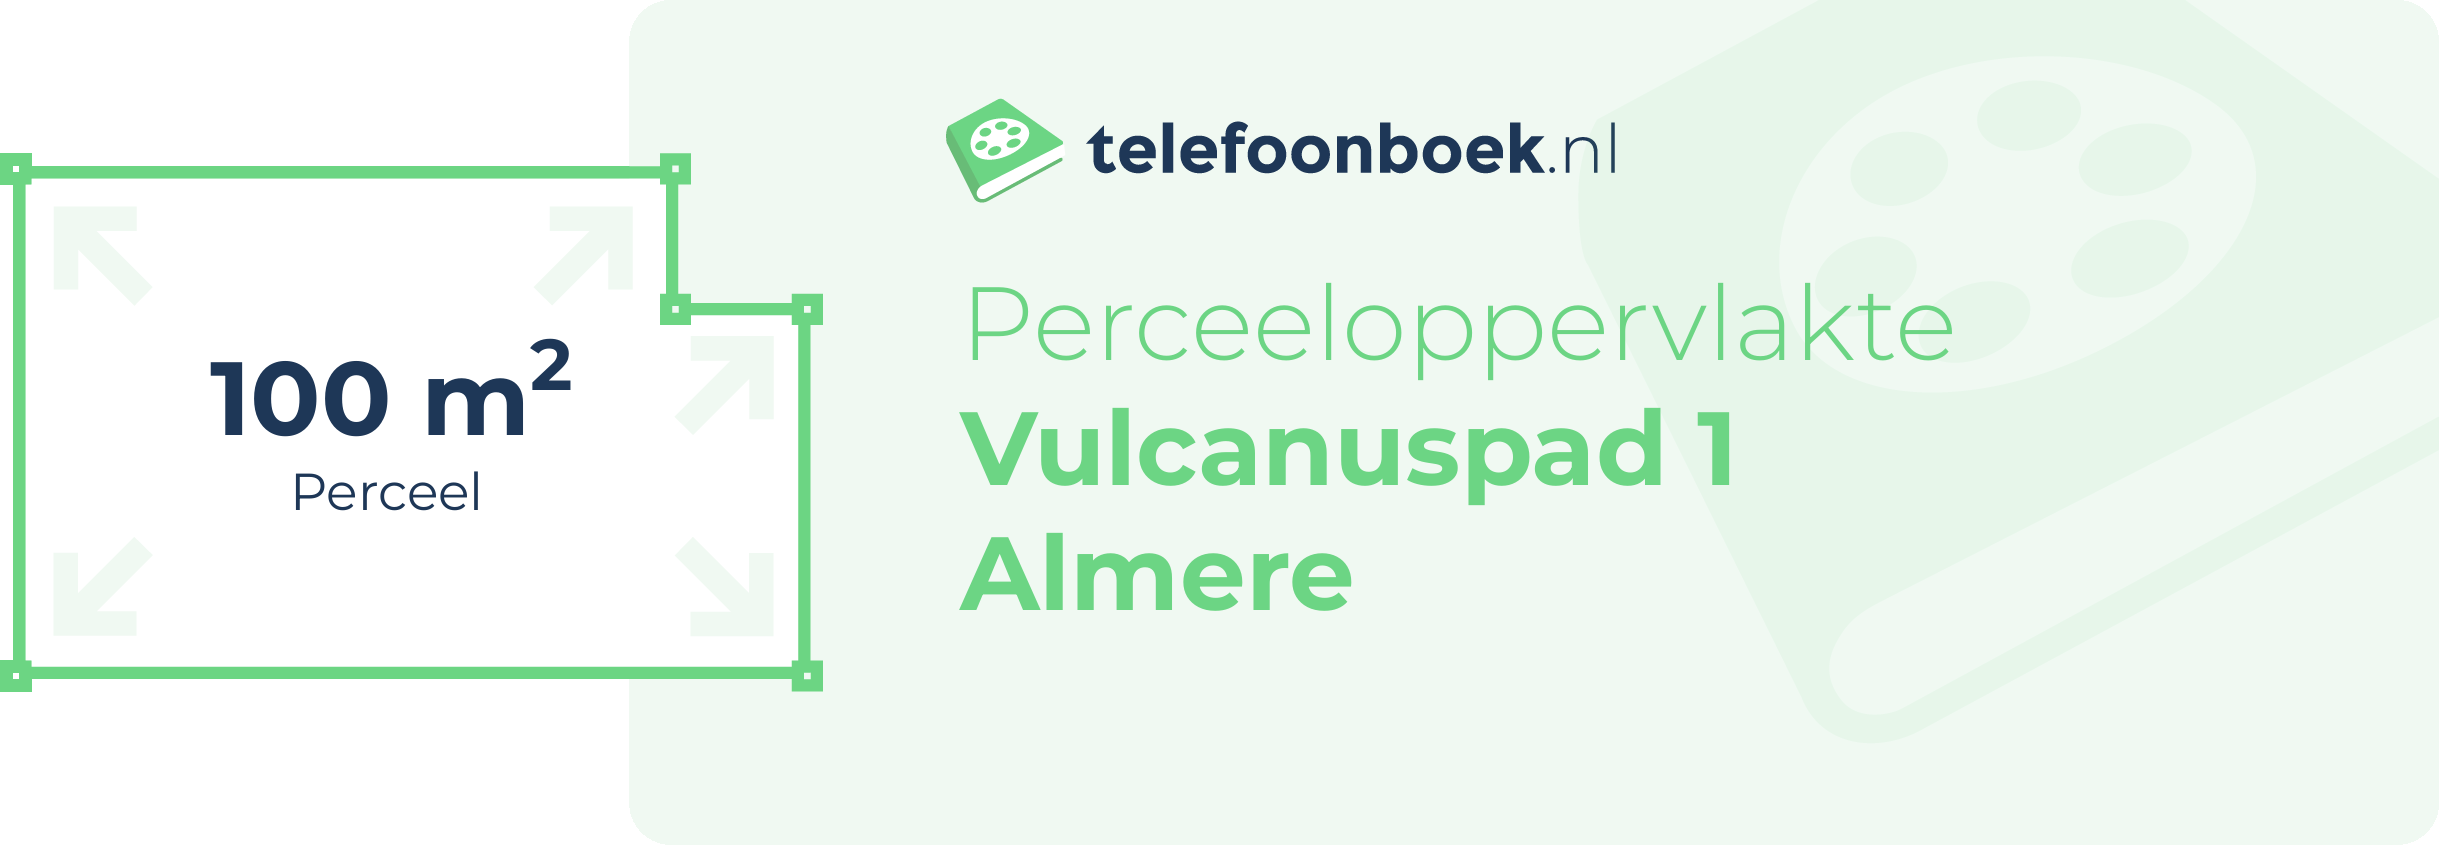 Perceeloppervlakte Vulcanuspad 1 Almere